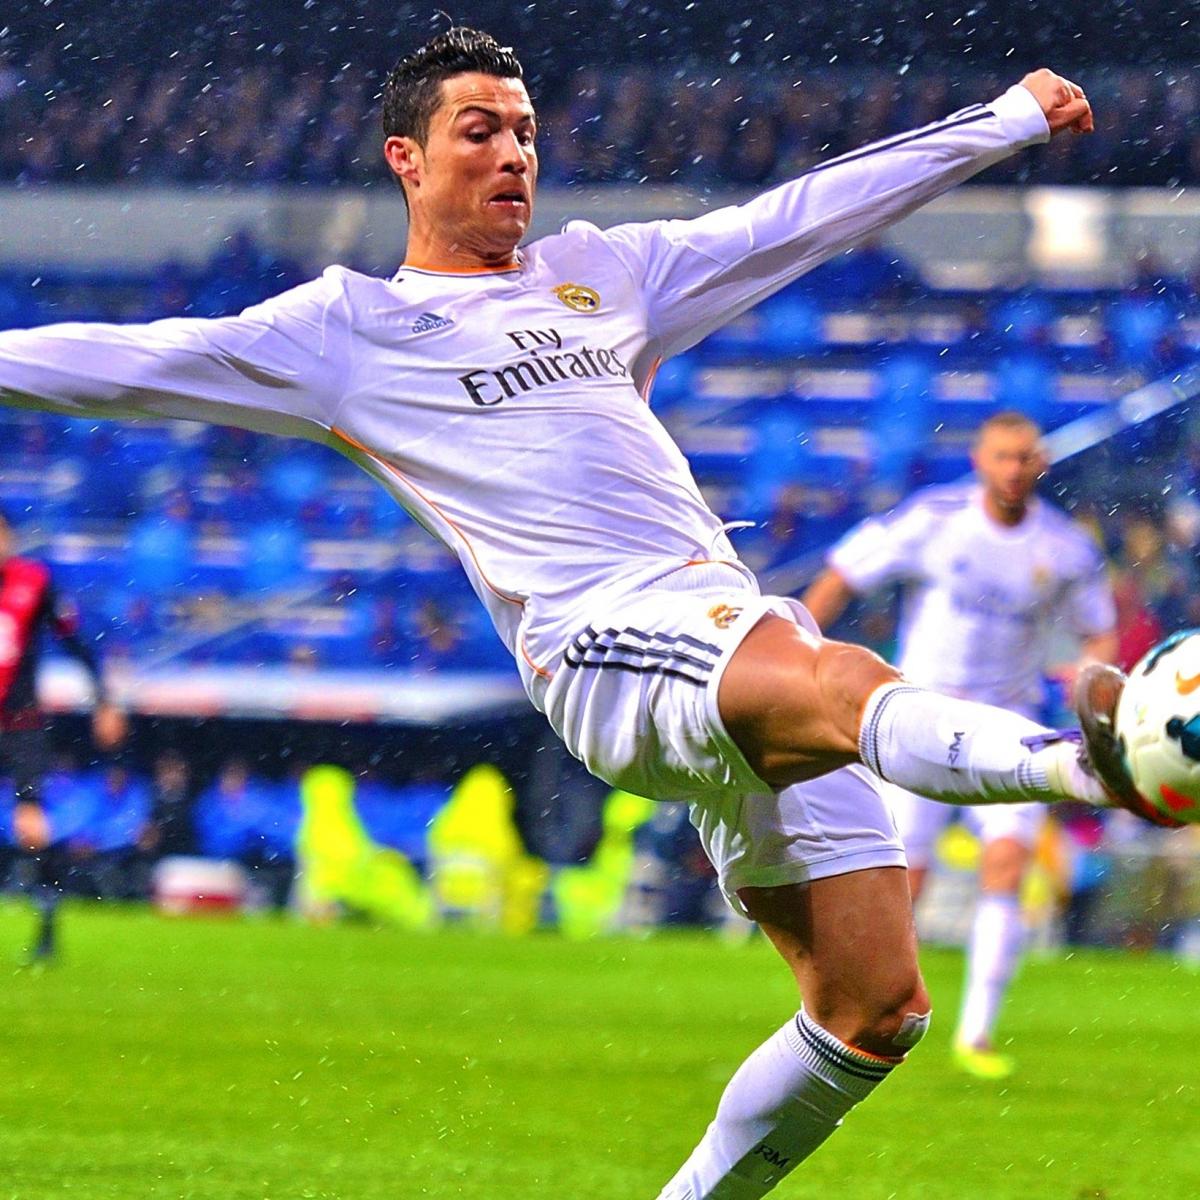 Cristiano Ronaldo Injury Updates On Real Madrid Stars Knee And Return